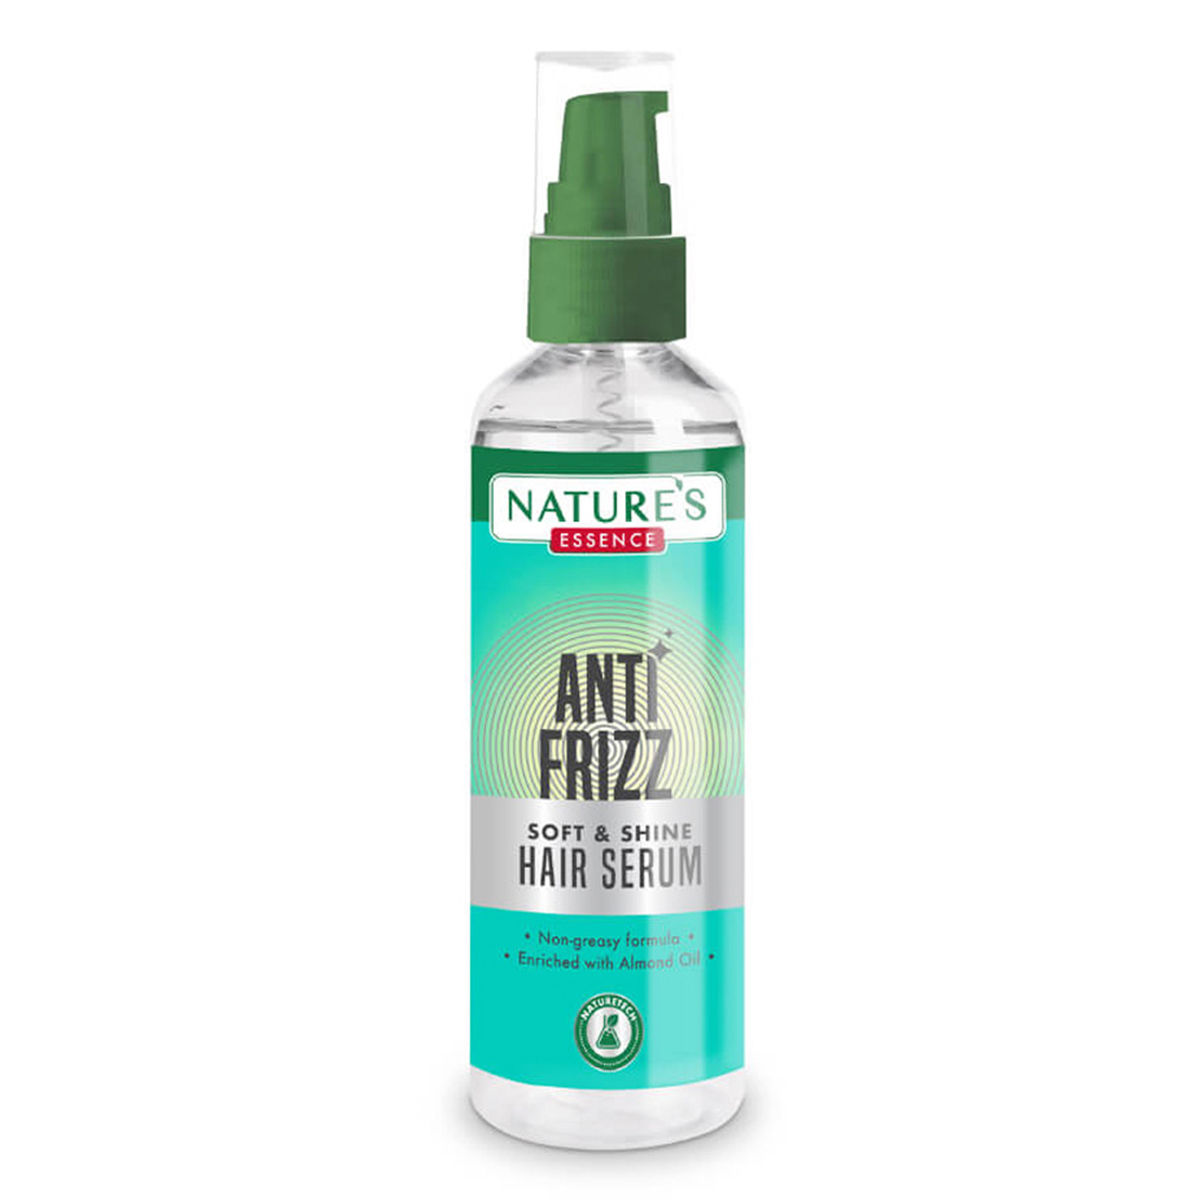 Buy Nature's Essence Anti Frizz Soft & Shine Hair Serum, 100 ml Online